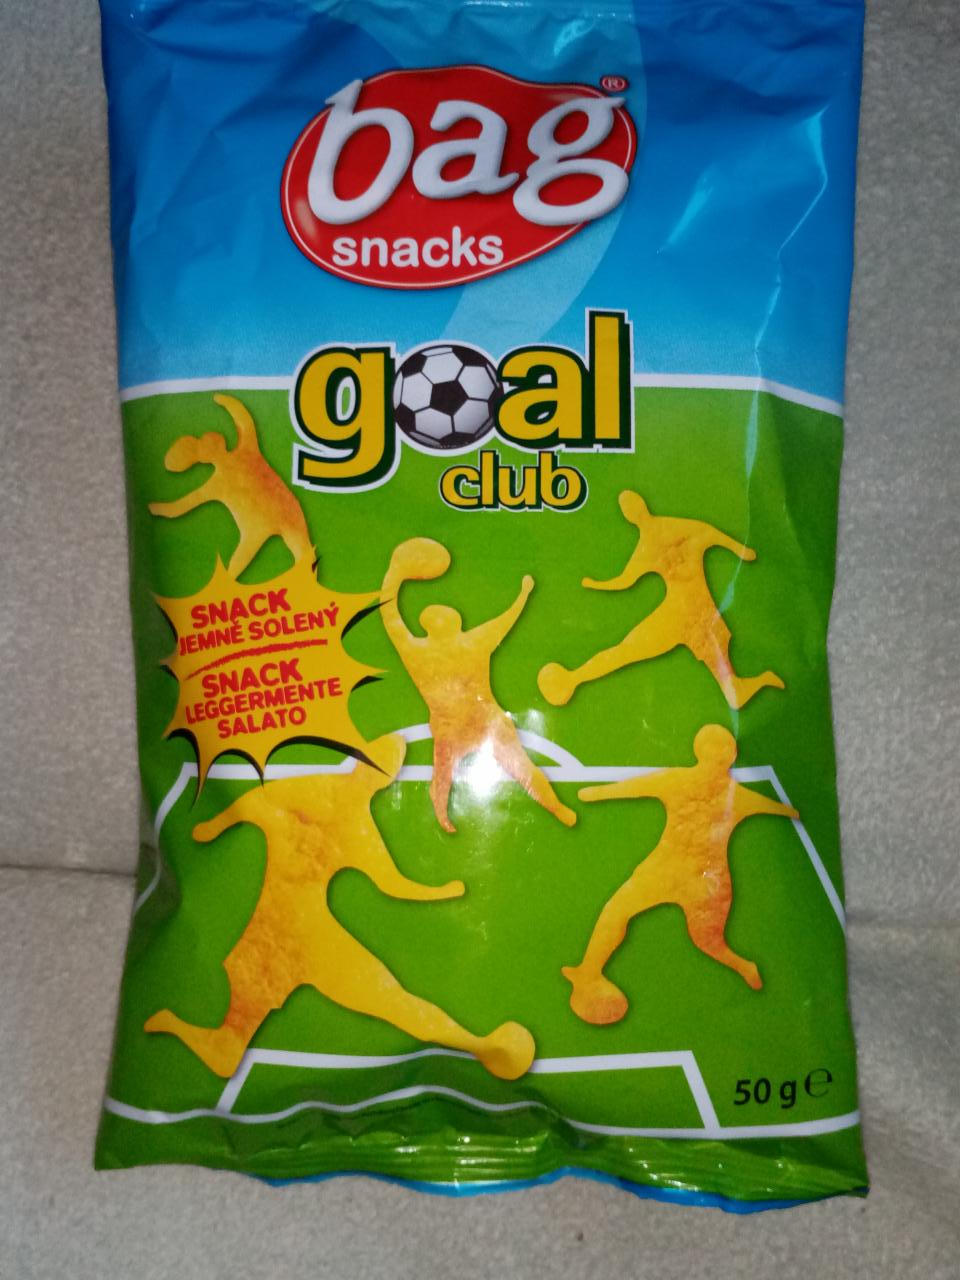 Fotografie - Bag snacks goal club